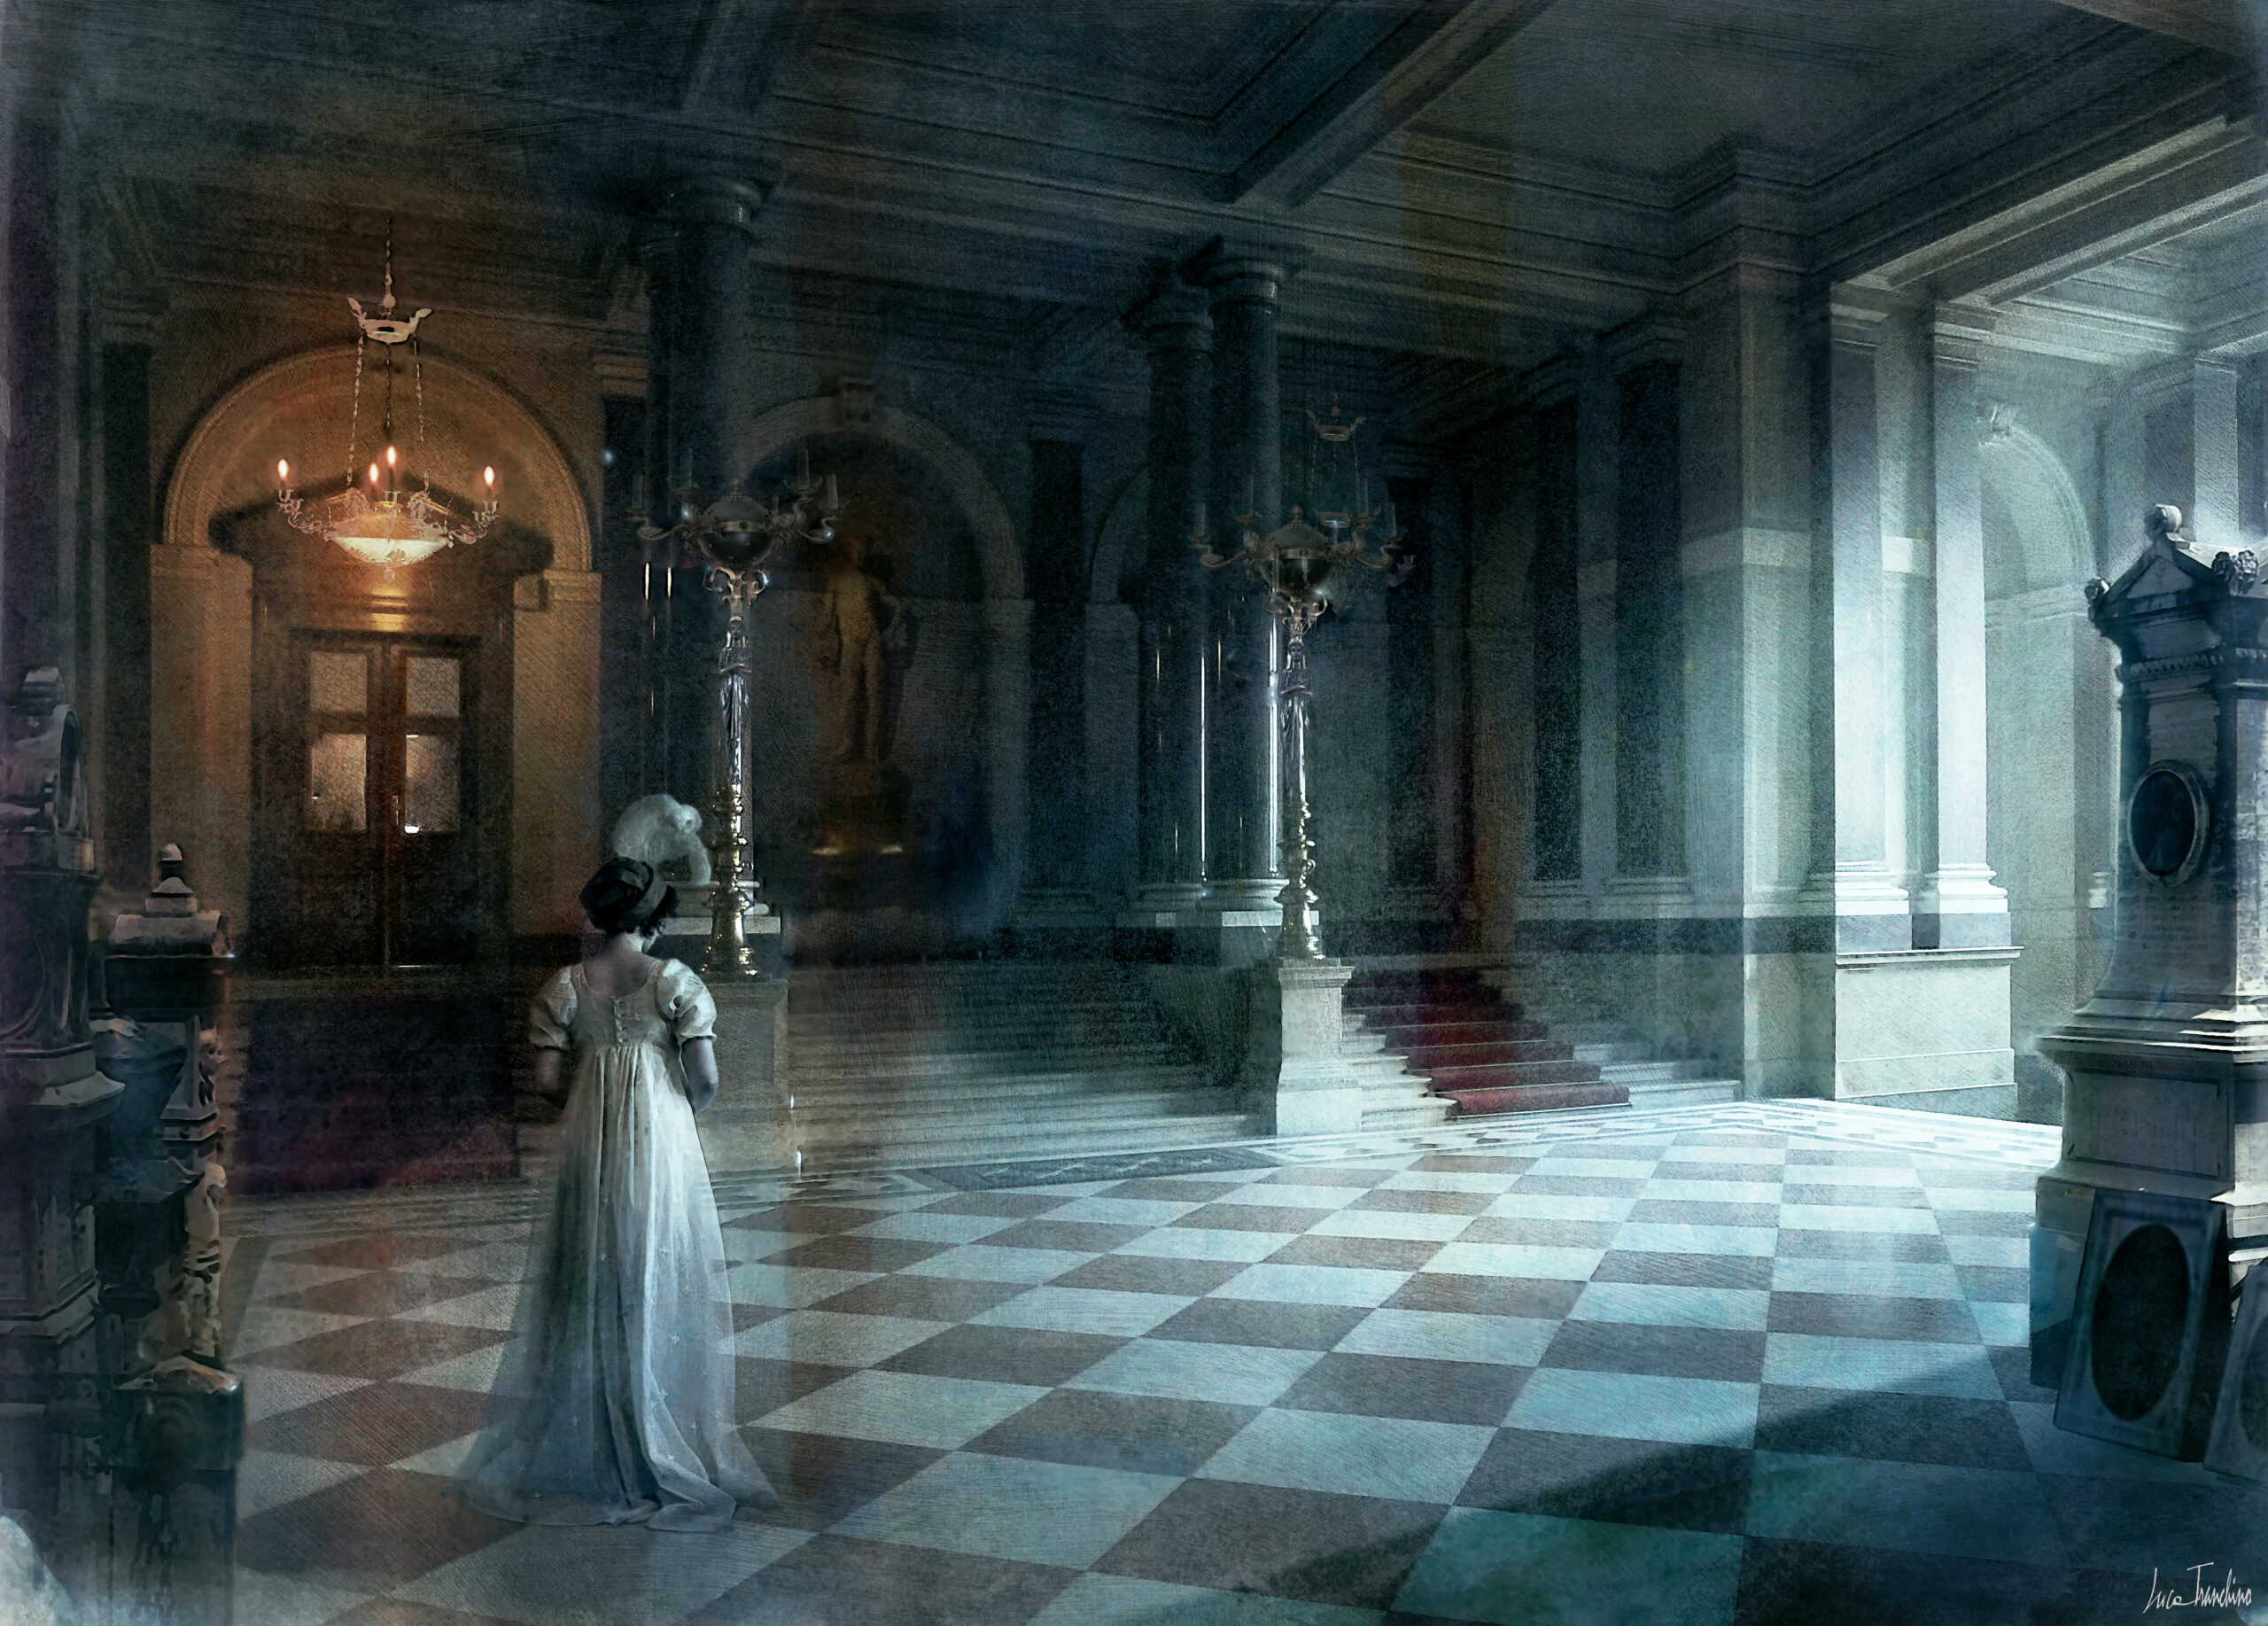 “Int. Mary Shelley’s Hall”, Concept Art by Luca Tranchino - ©2019 - Mixed Media